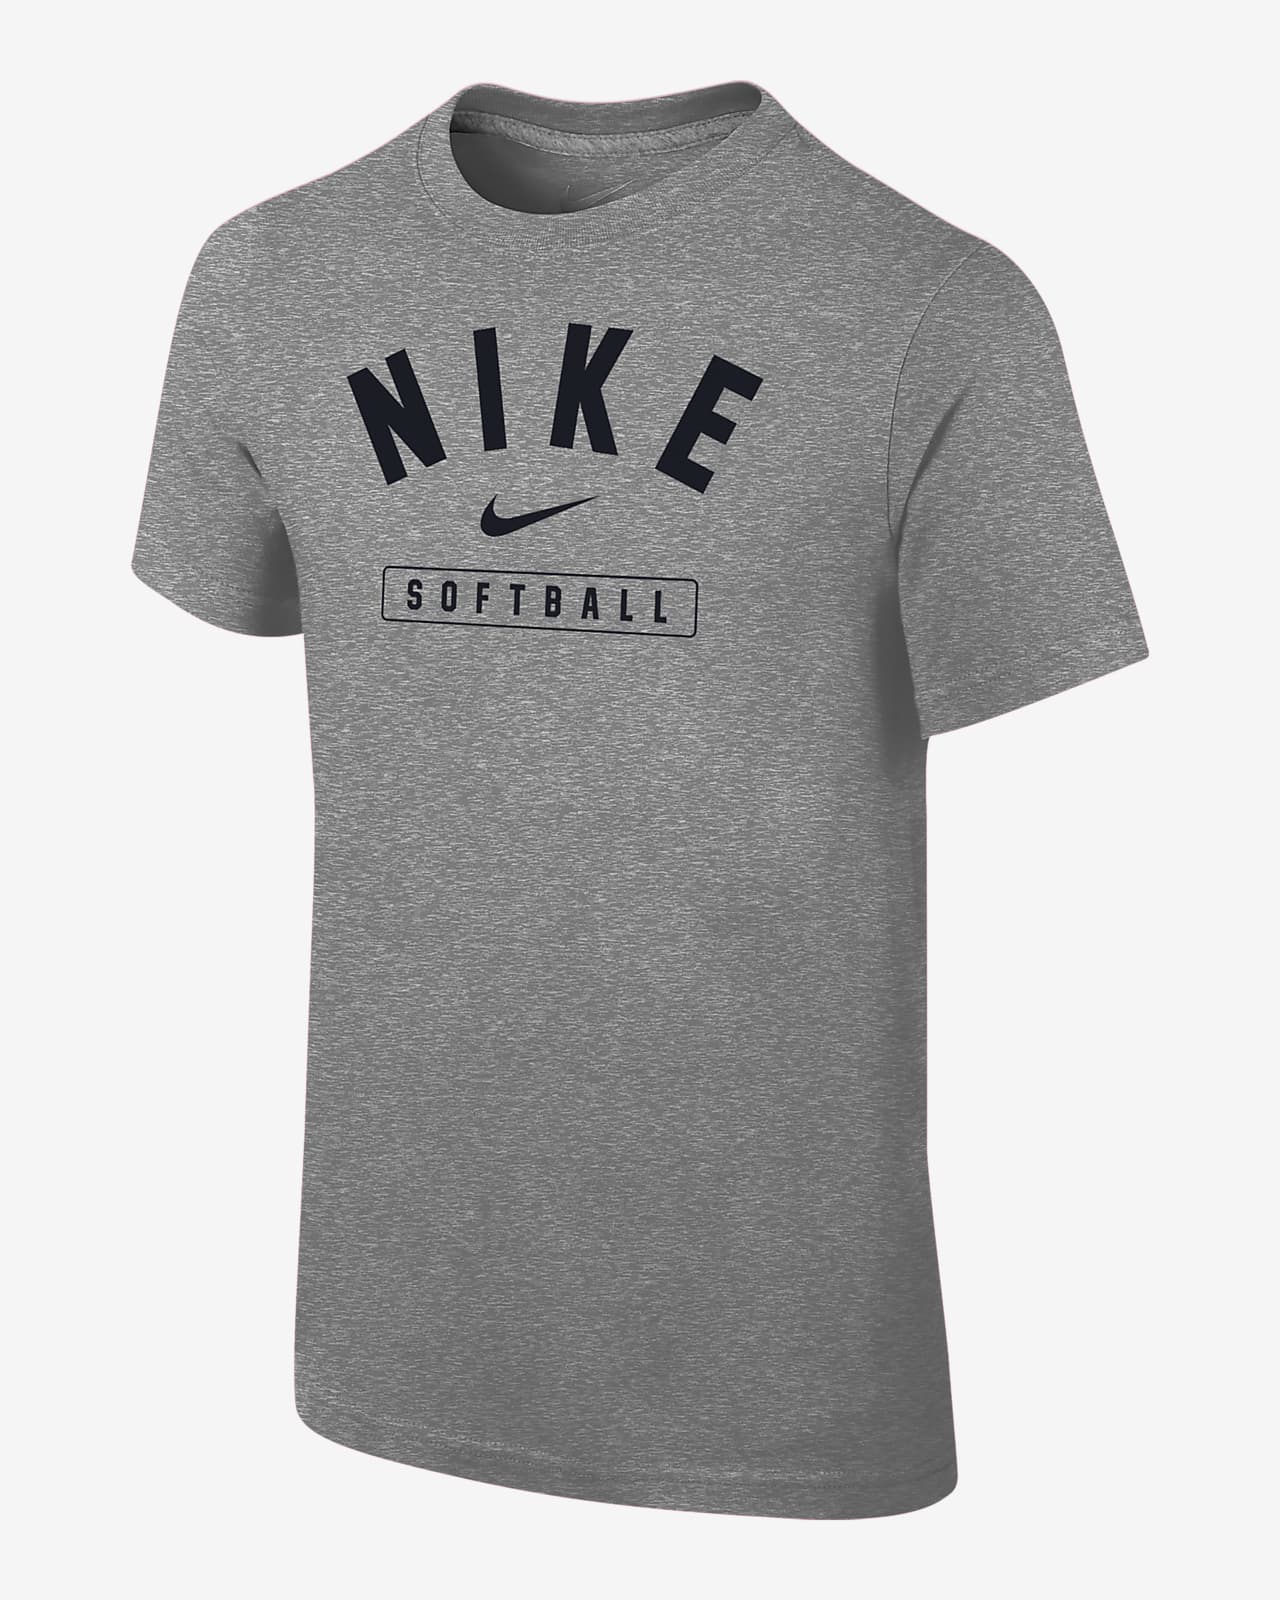 Nike Big Kids' Softball T-Shirt